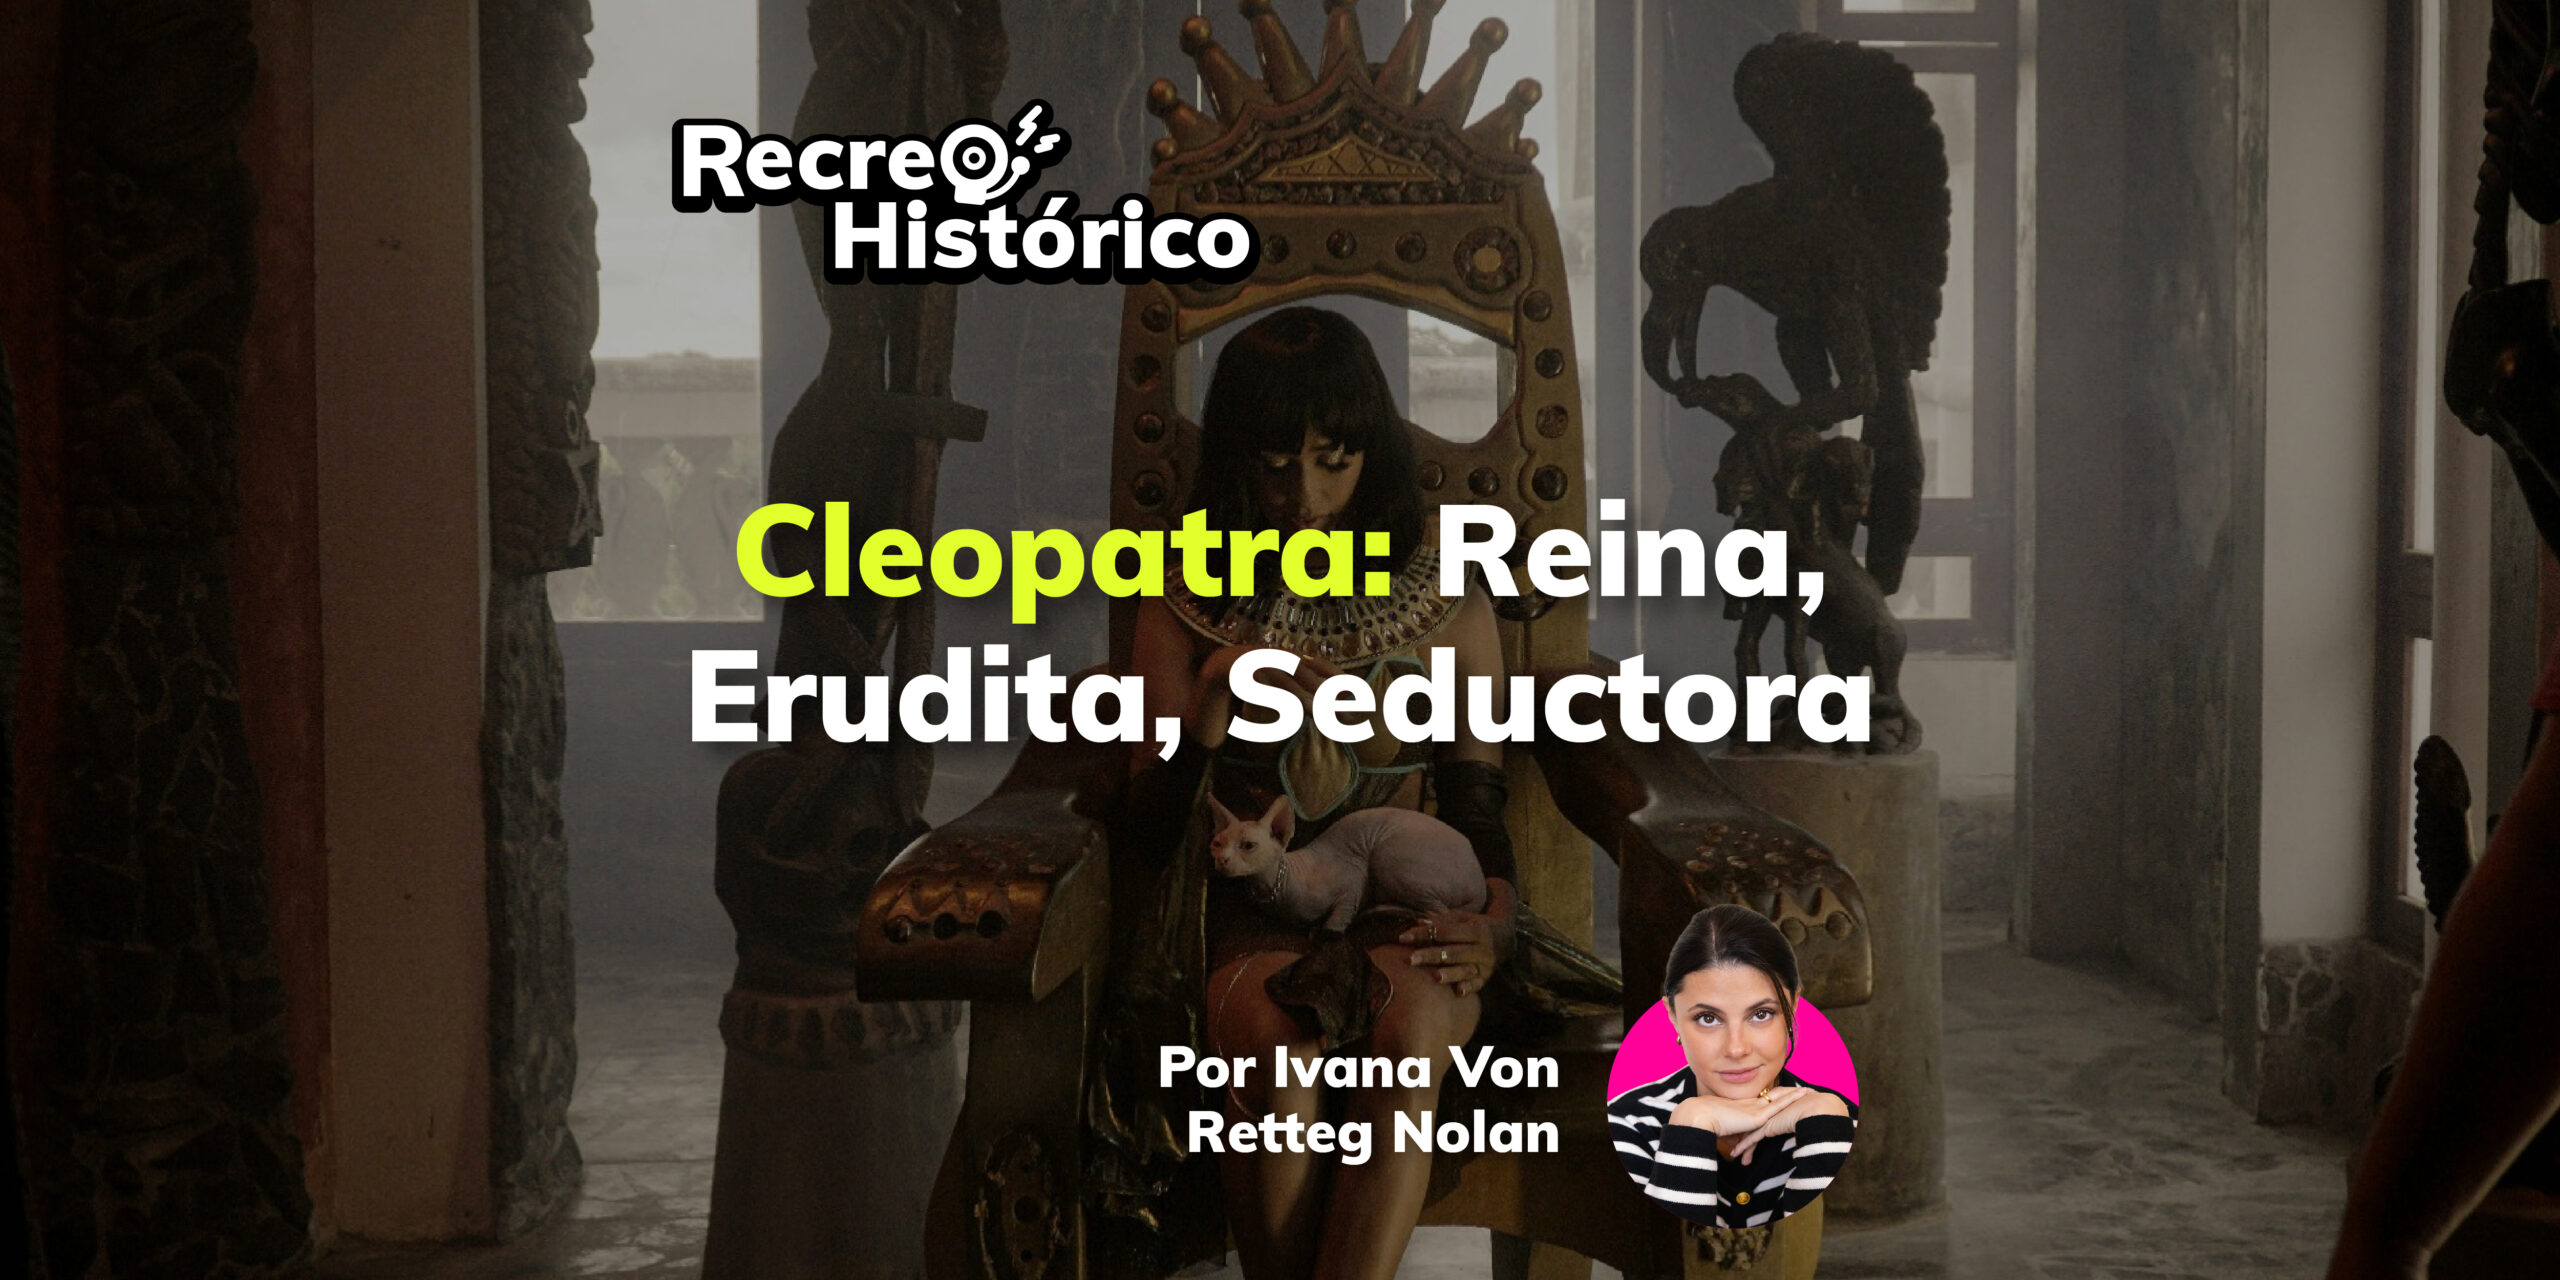 recreo histórico cleopatra